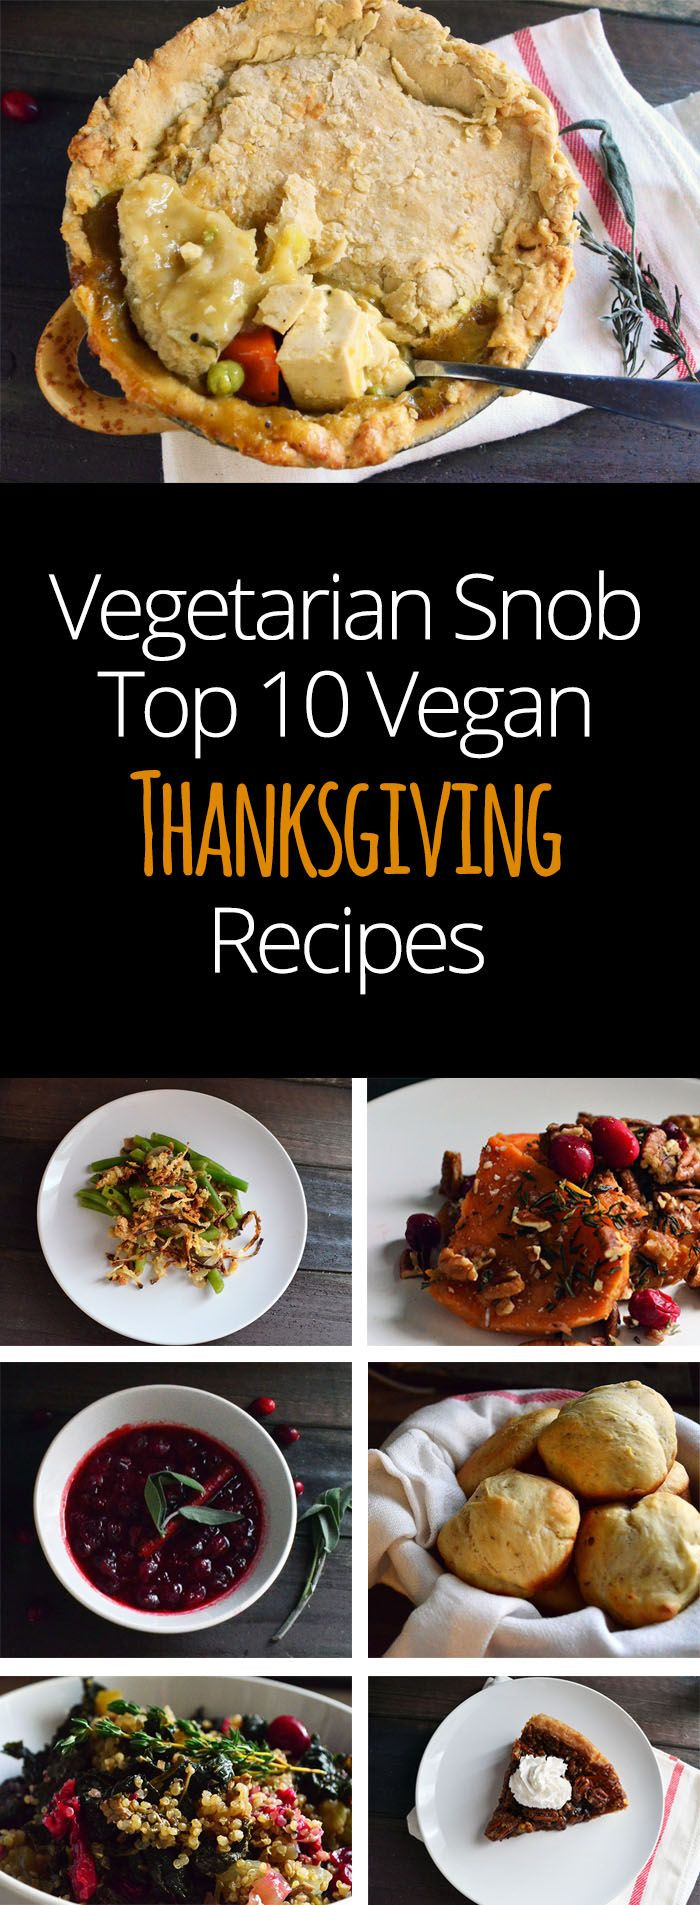 Top Vegetarian Thanksgiving Recipes
 Monchoso Top 10 vegan Thanksgiving recipes will give